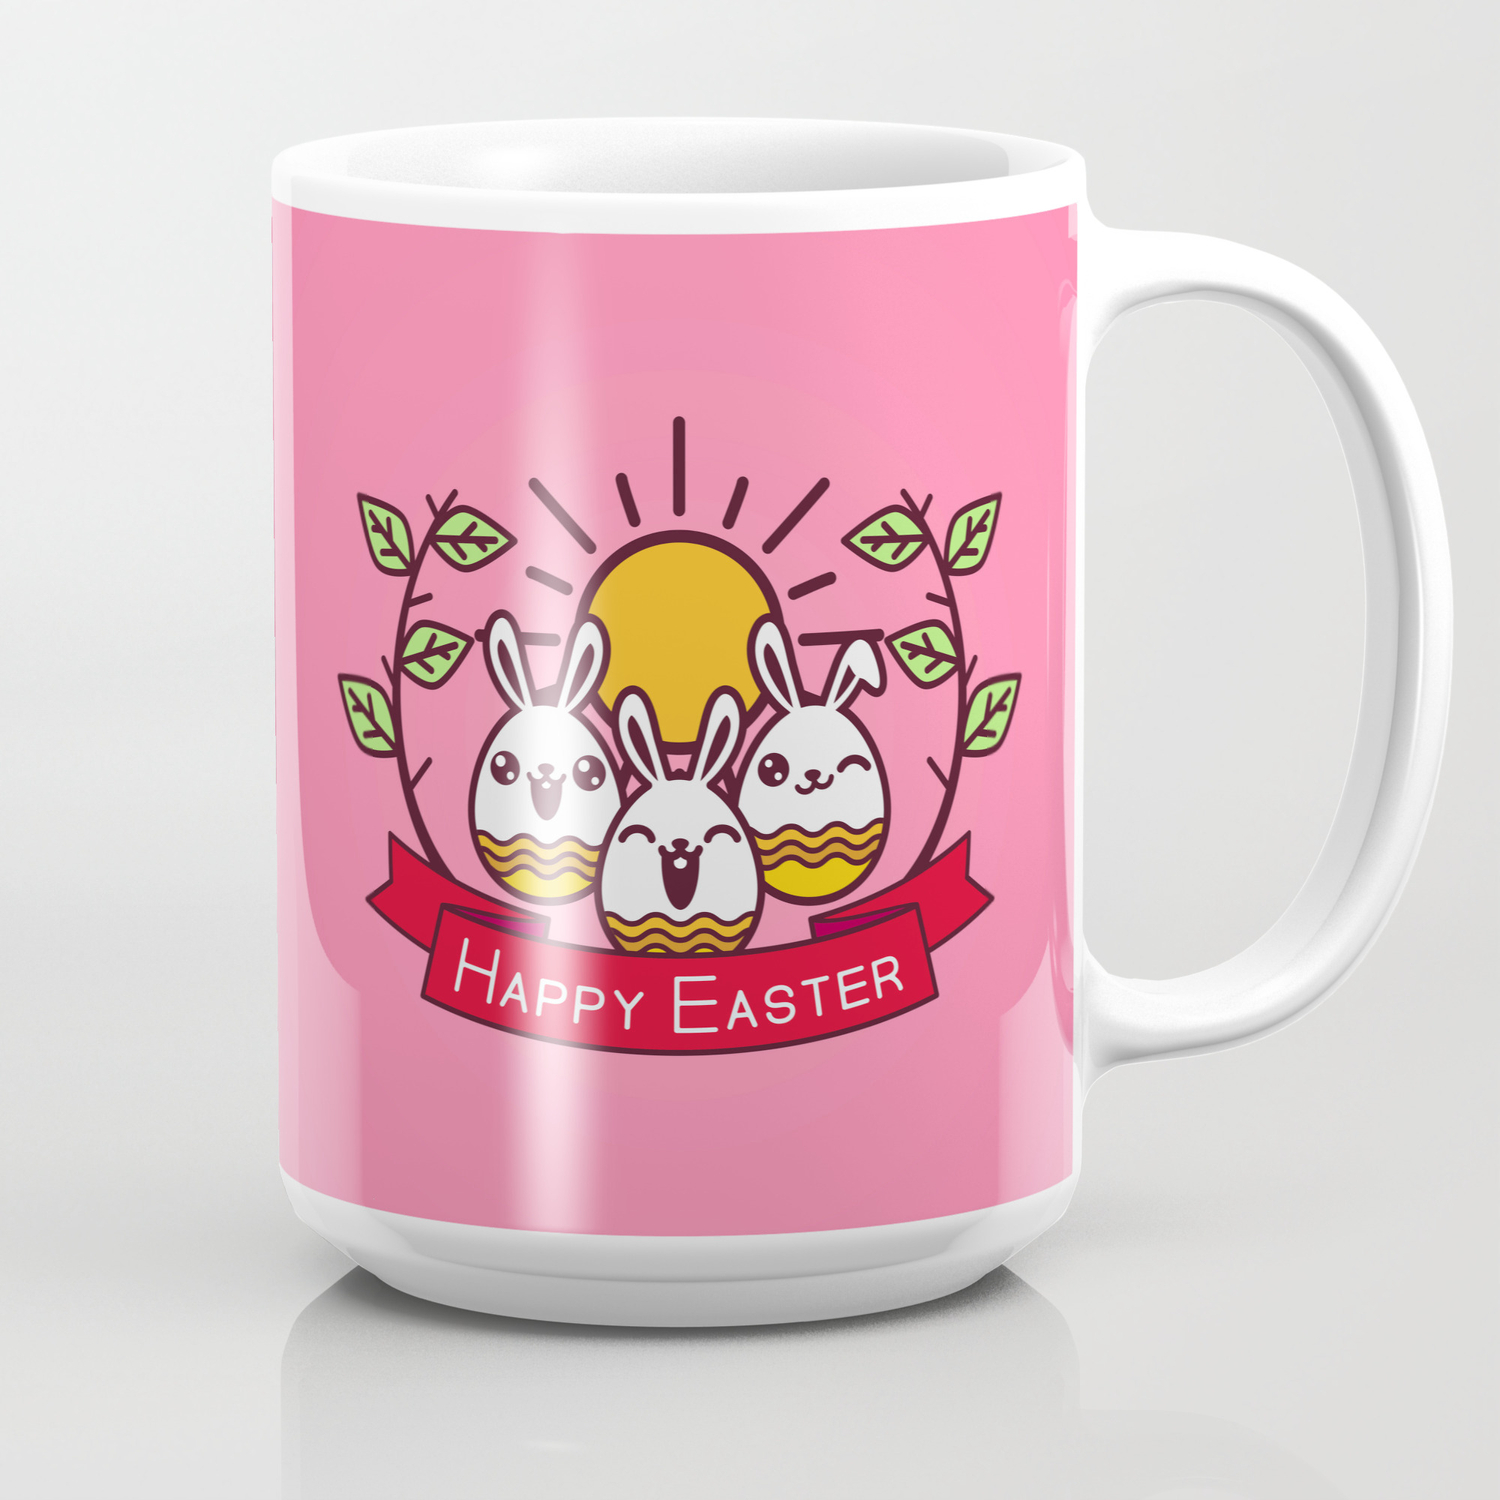 Happy Easter Mug